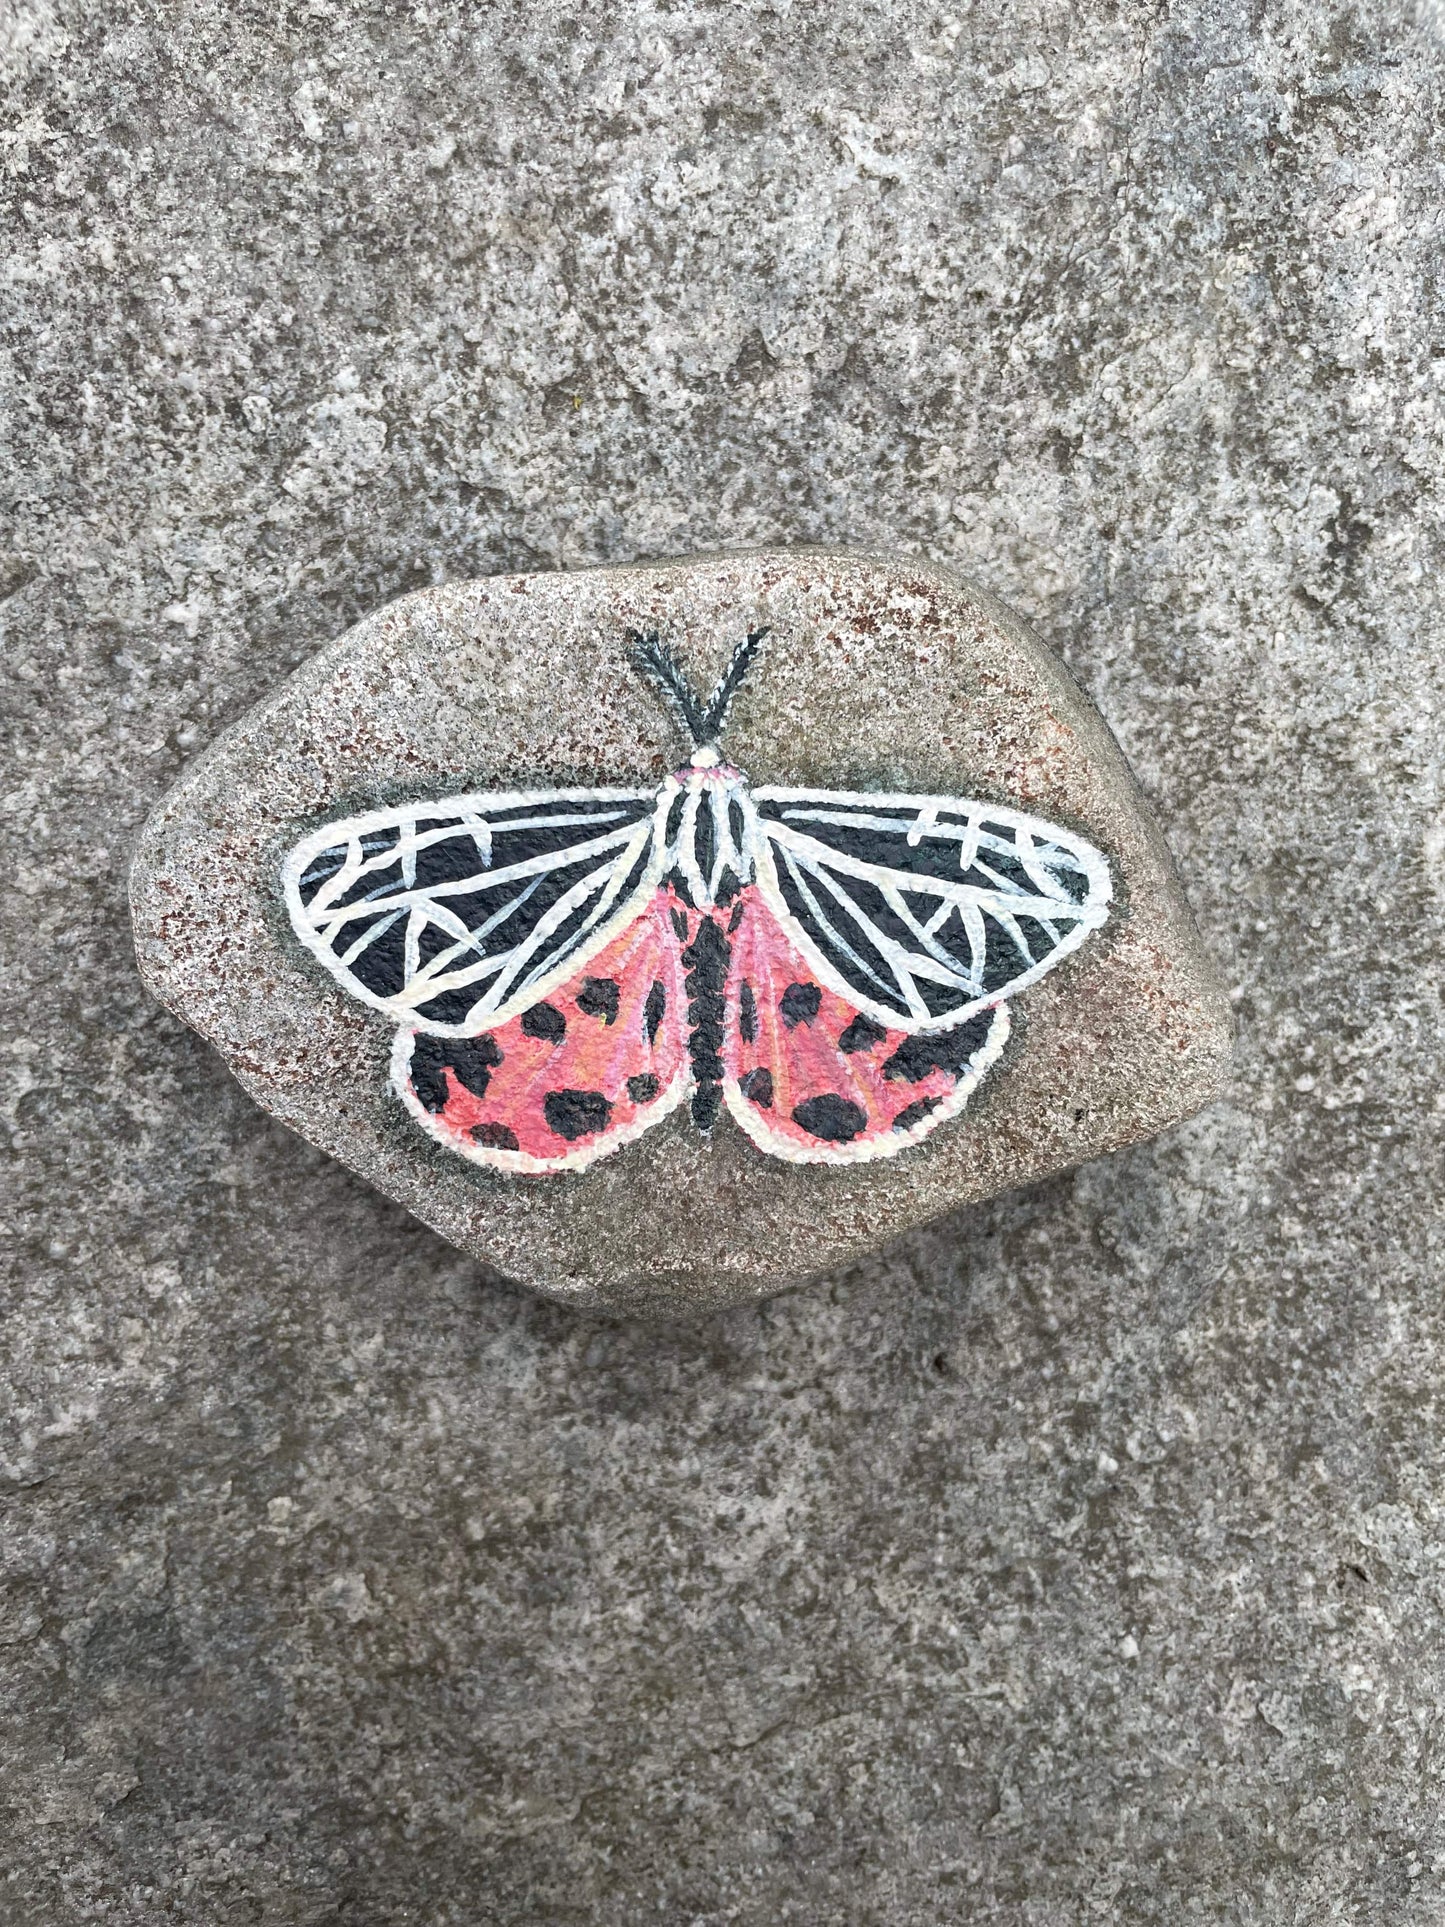 Virgin Tiger Moth Painted Rock